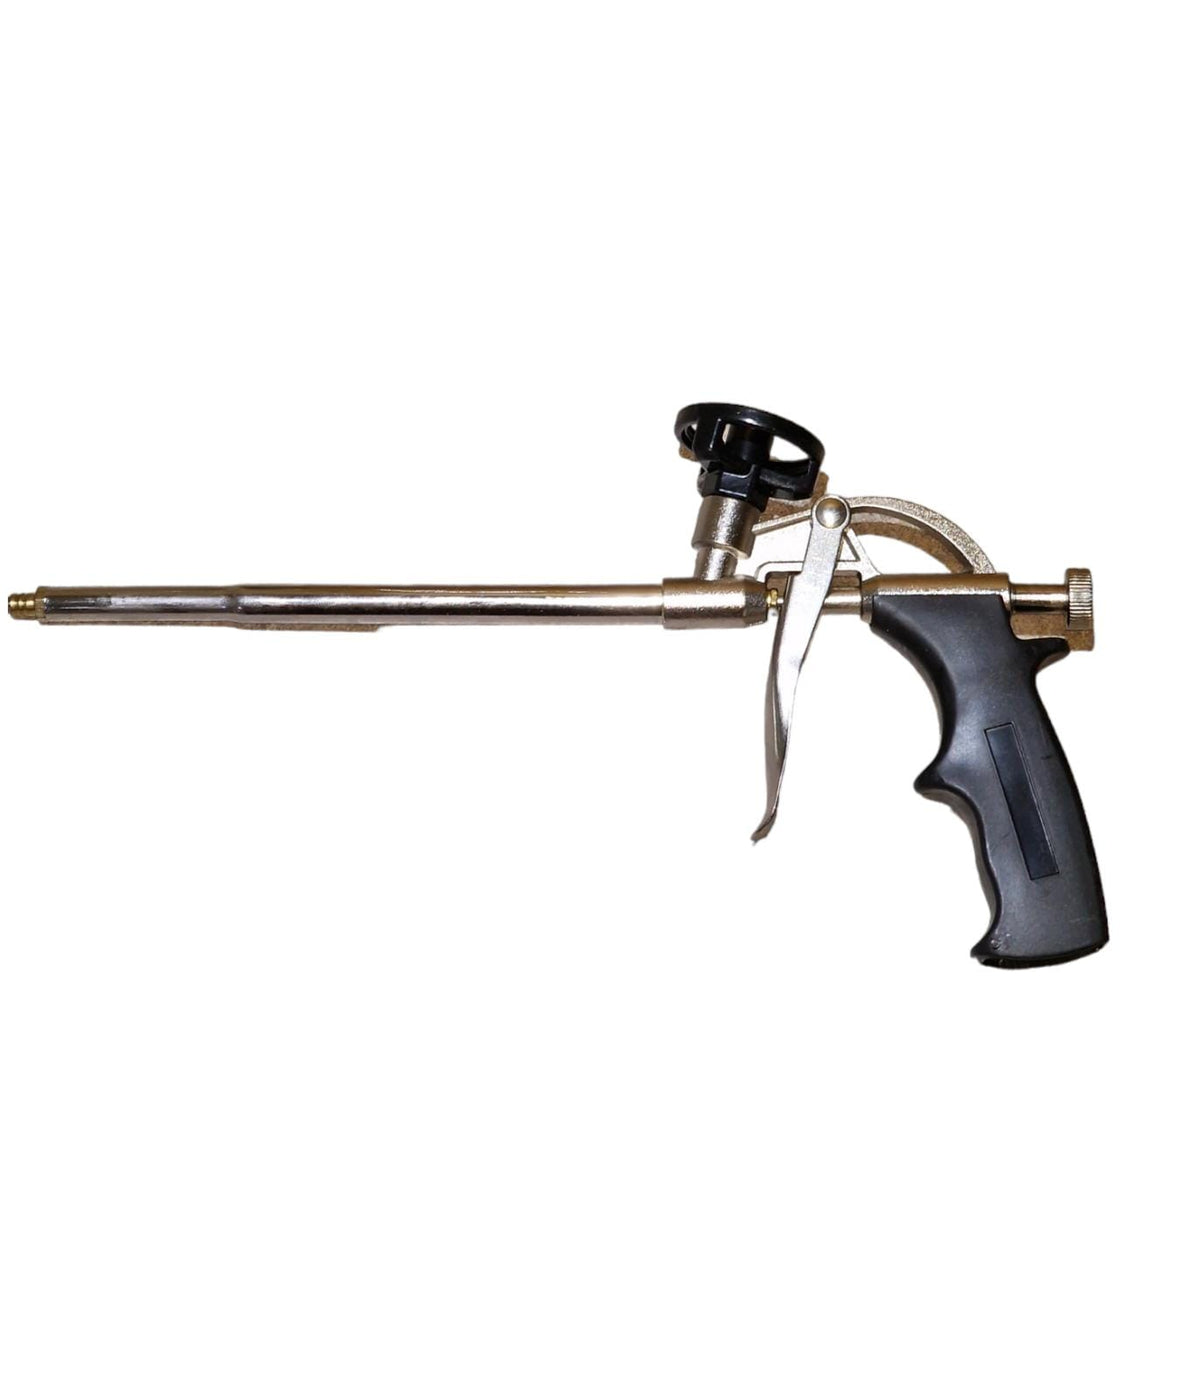 HCL015 Pistol de spuma plastic metal ROTOR